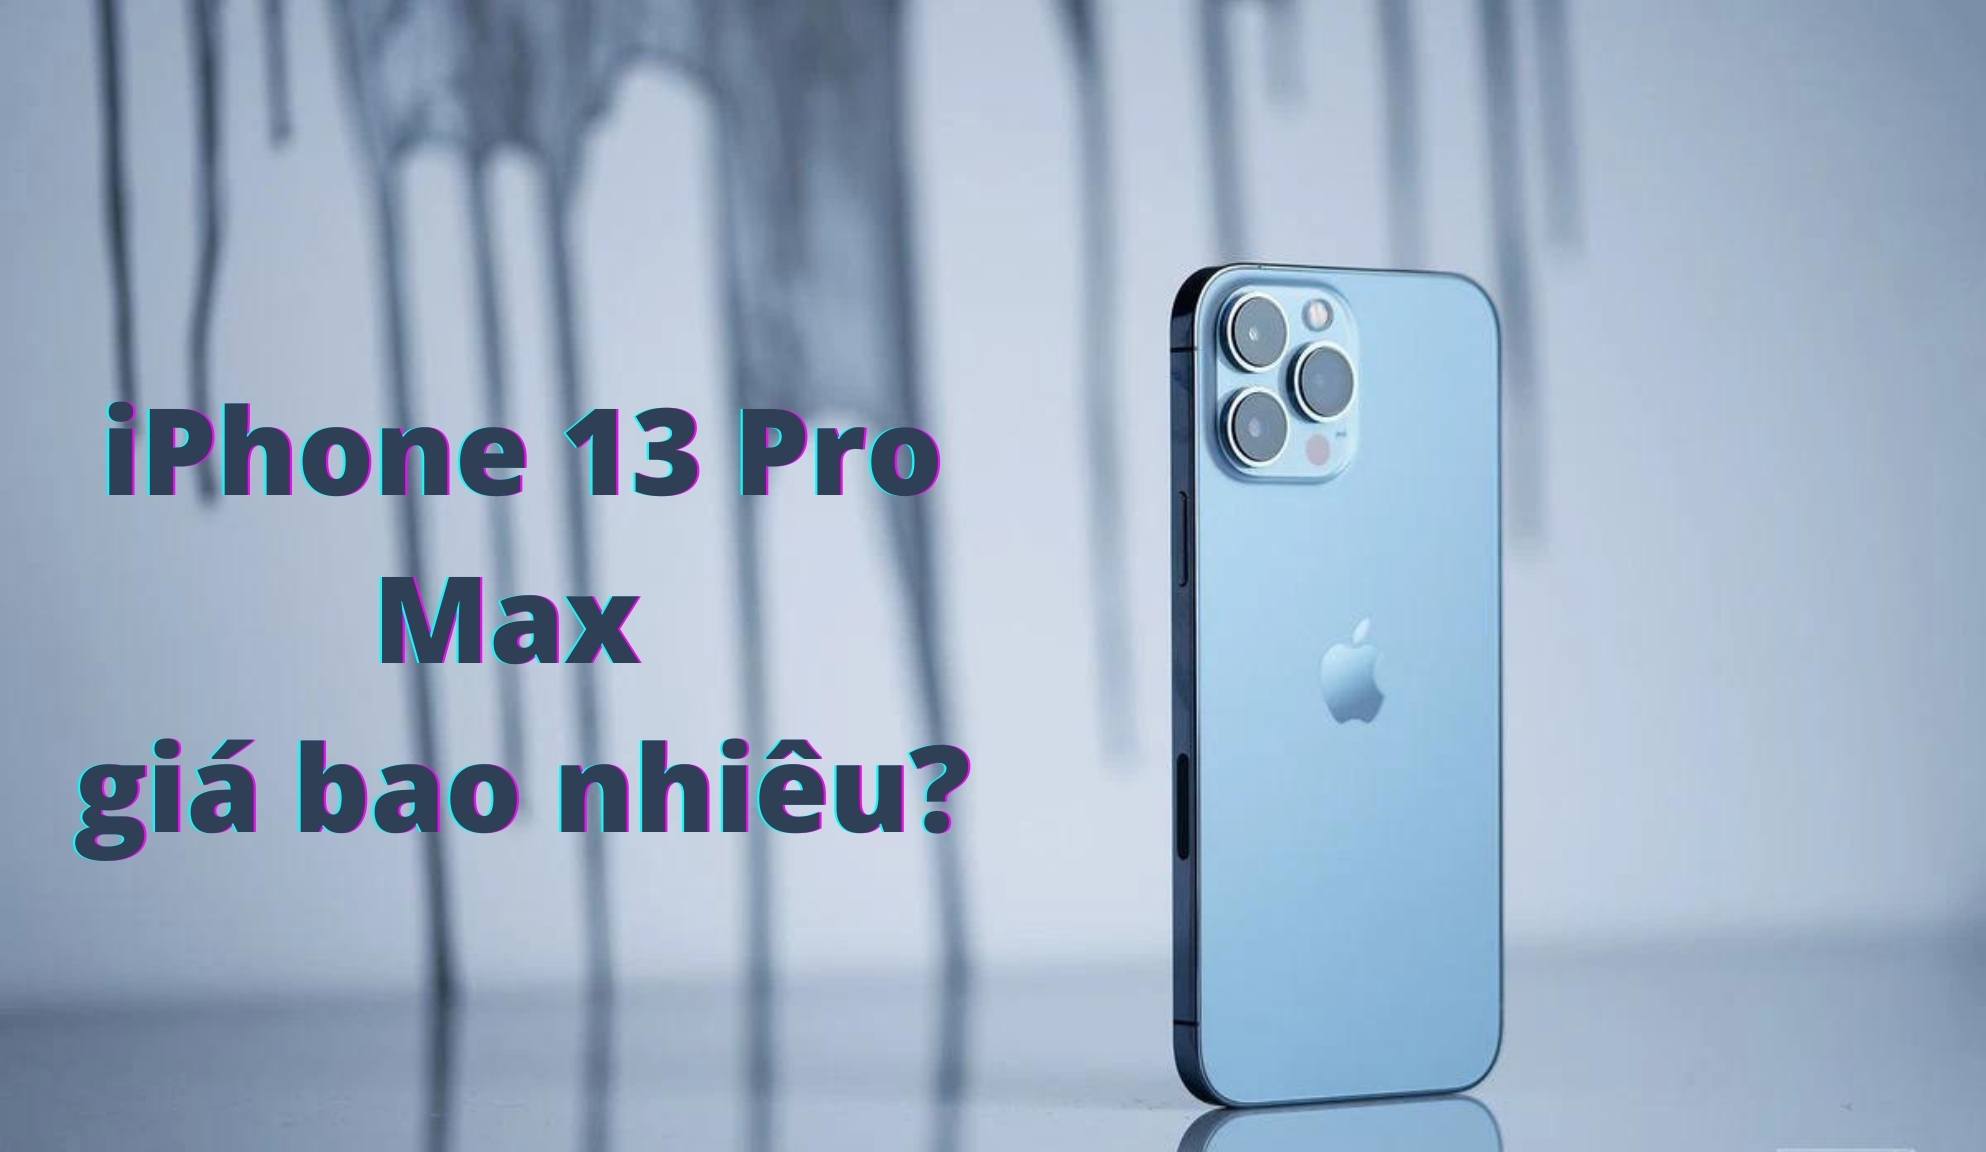 iPhone 13 Pro Max giá bao nhiêu